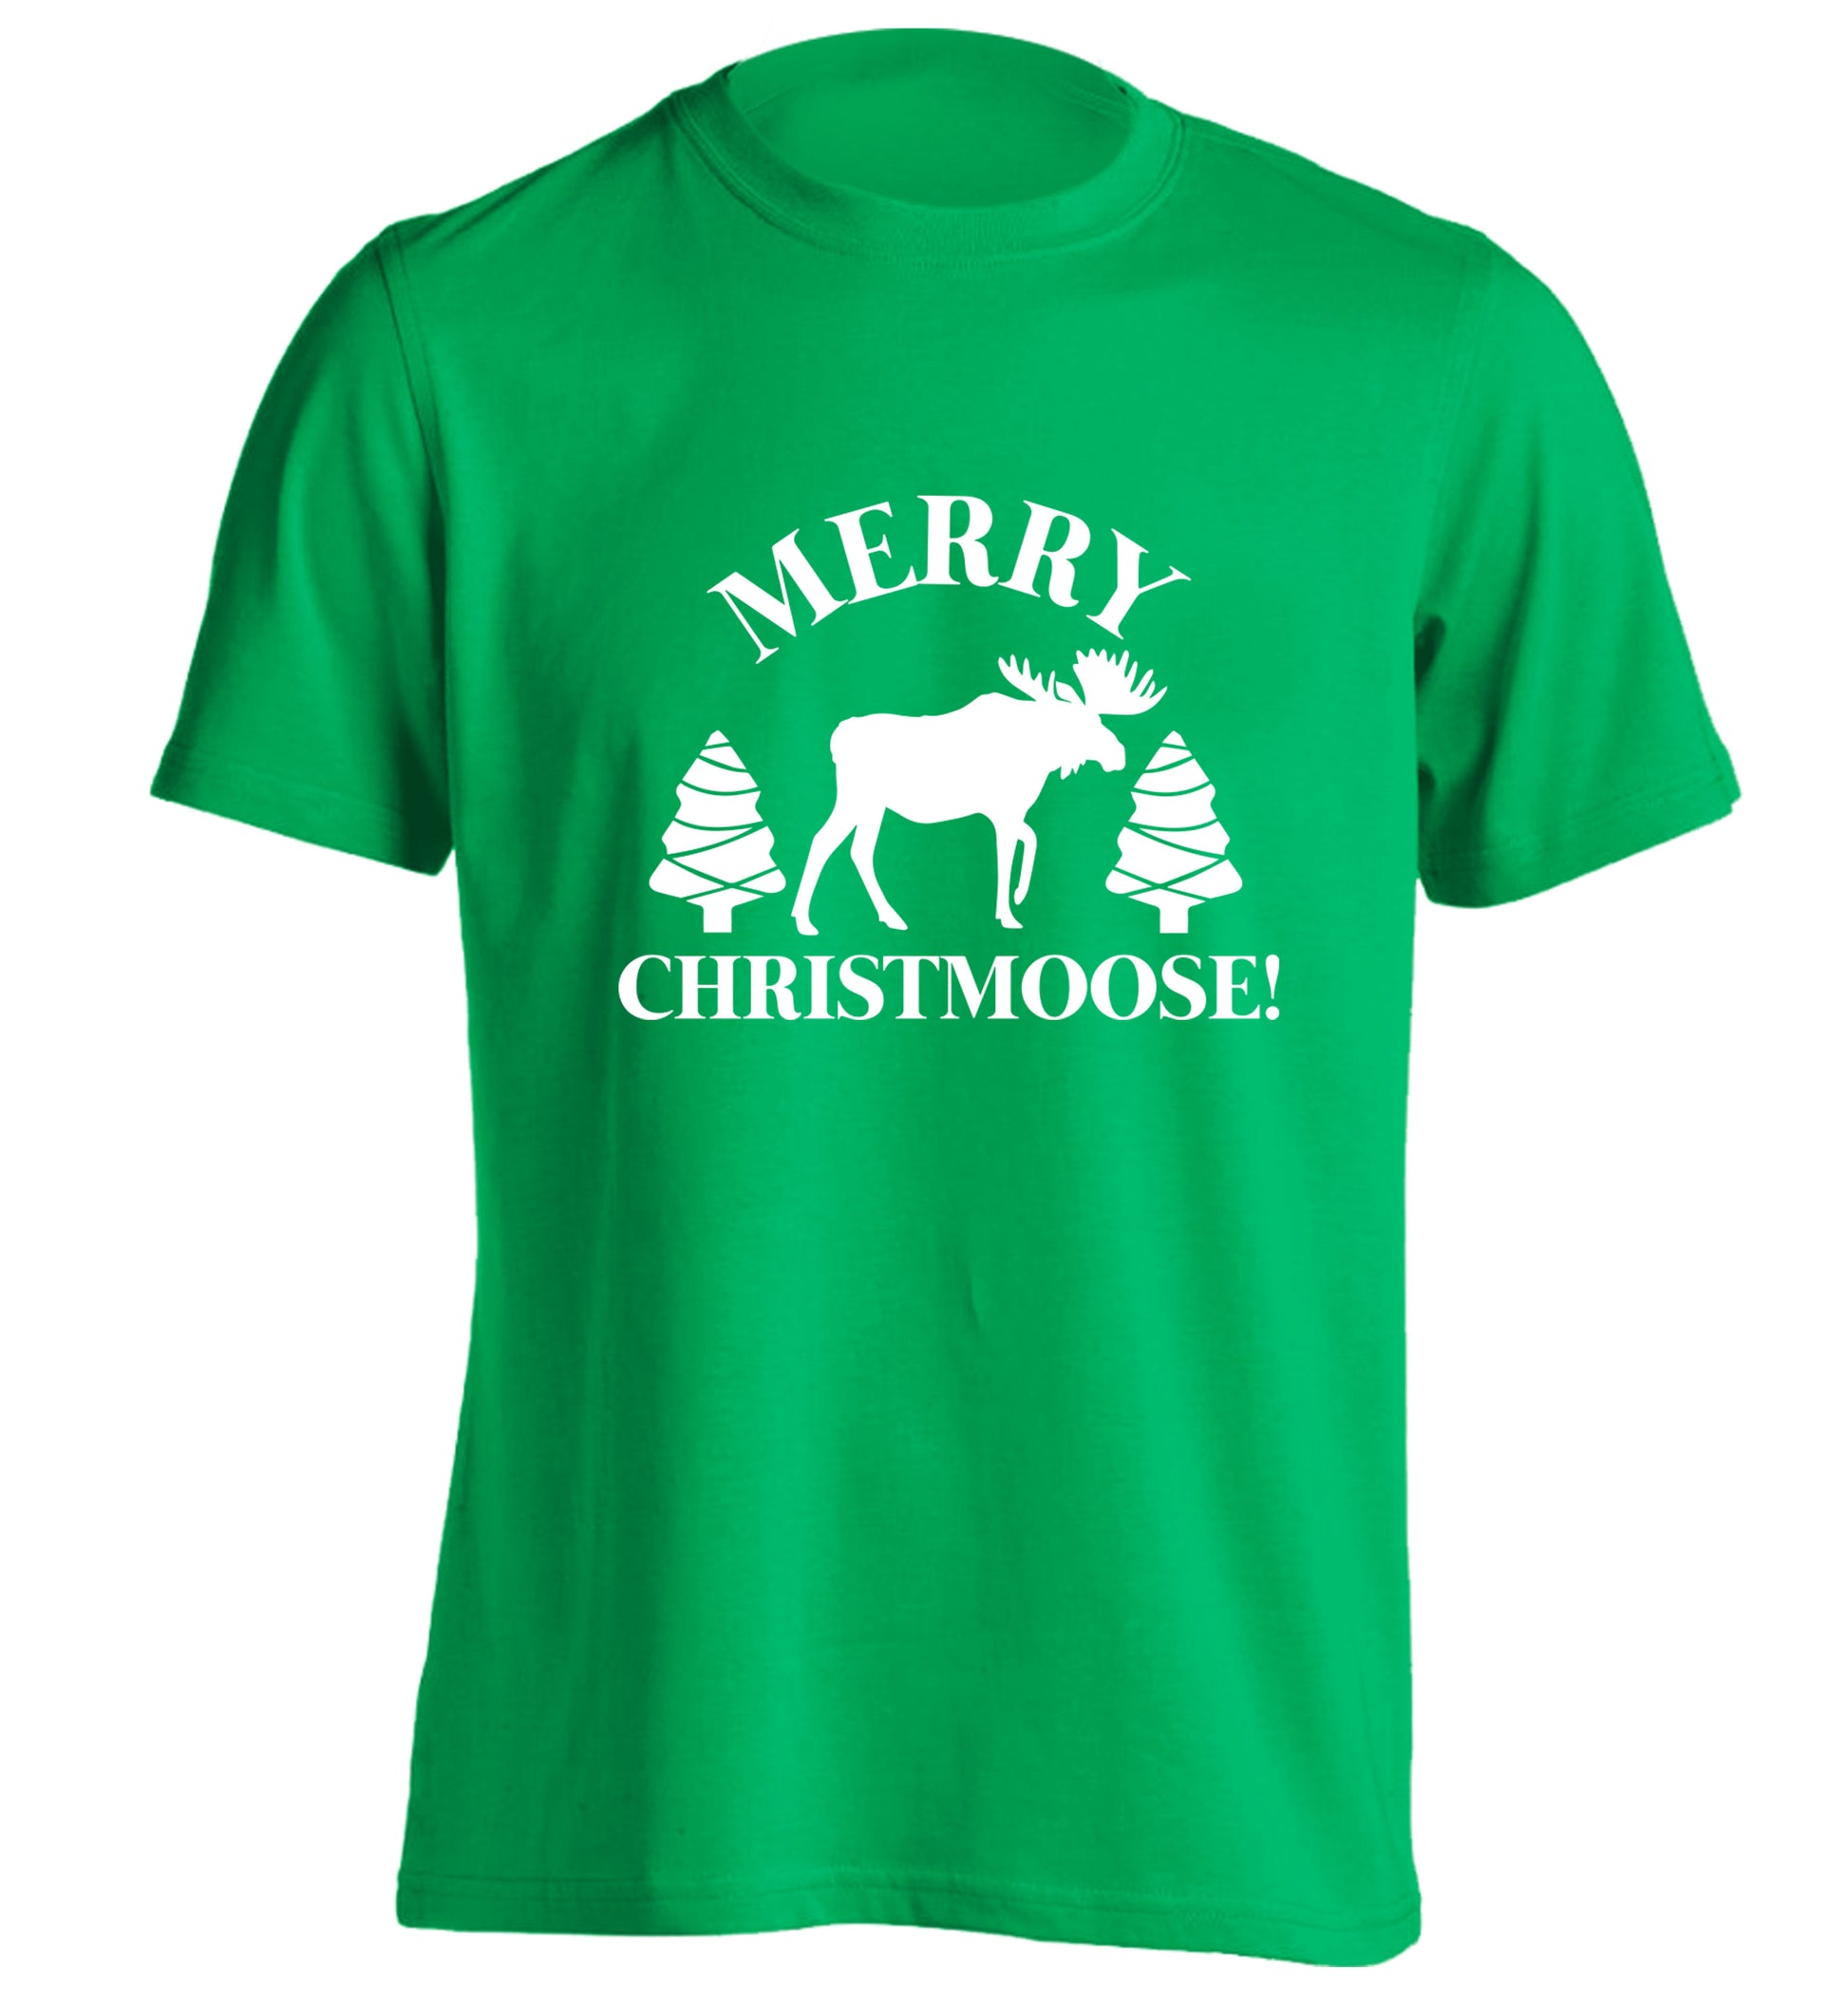 Merry Christmoose adults unisex green Tshirt 2XL